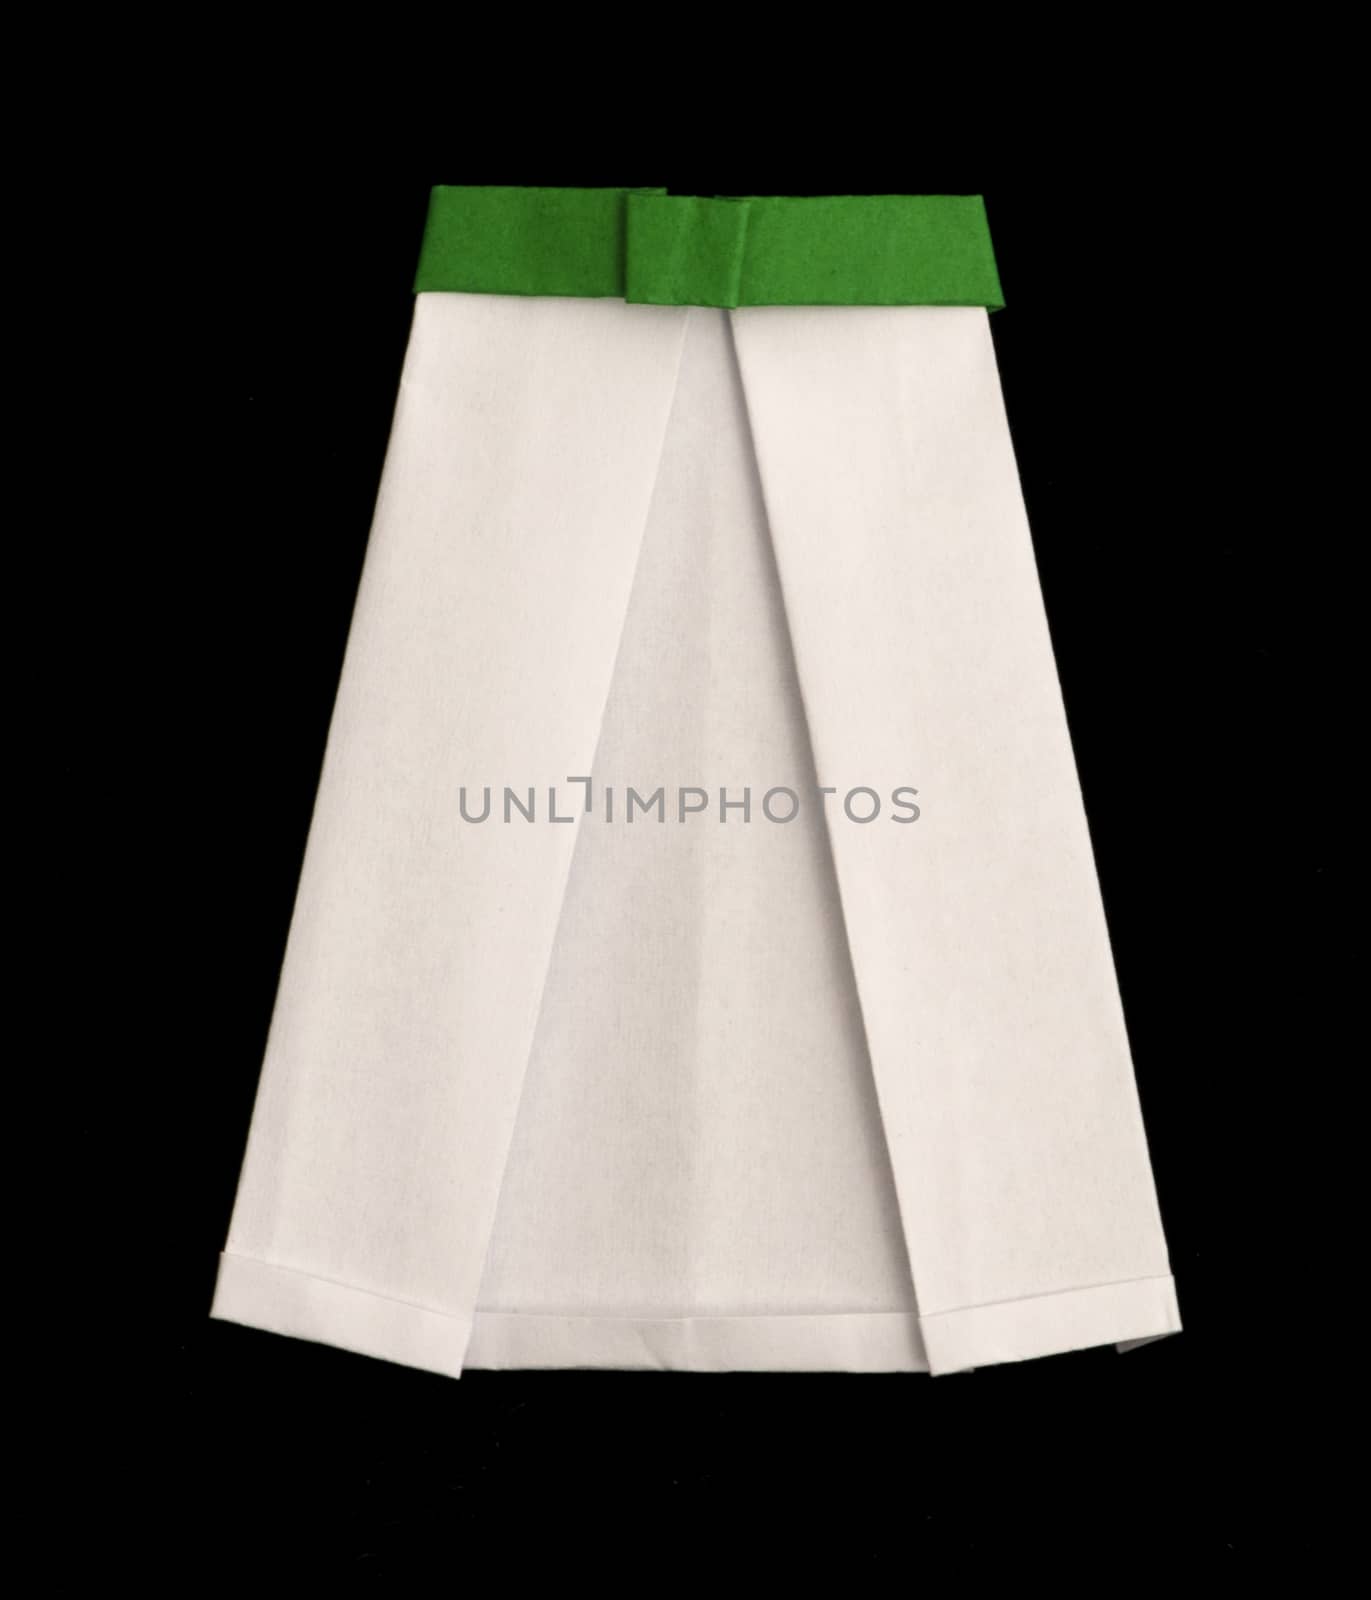 Skirt folded origami style by deyan_georgiev